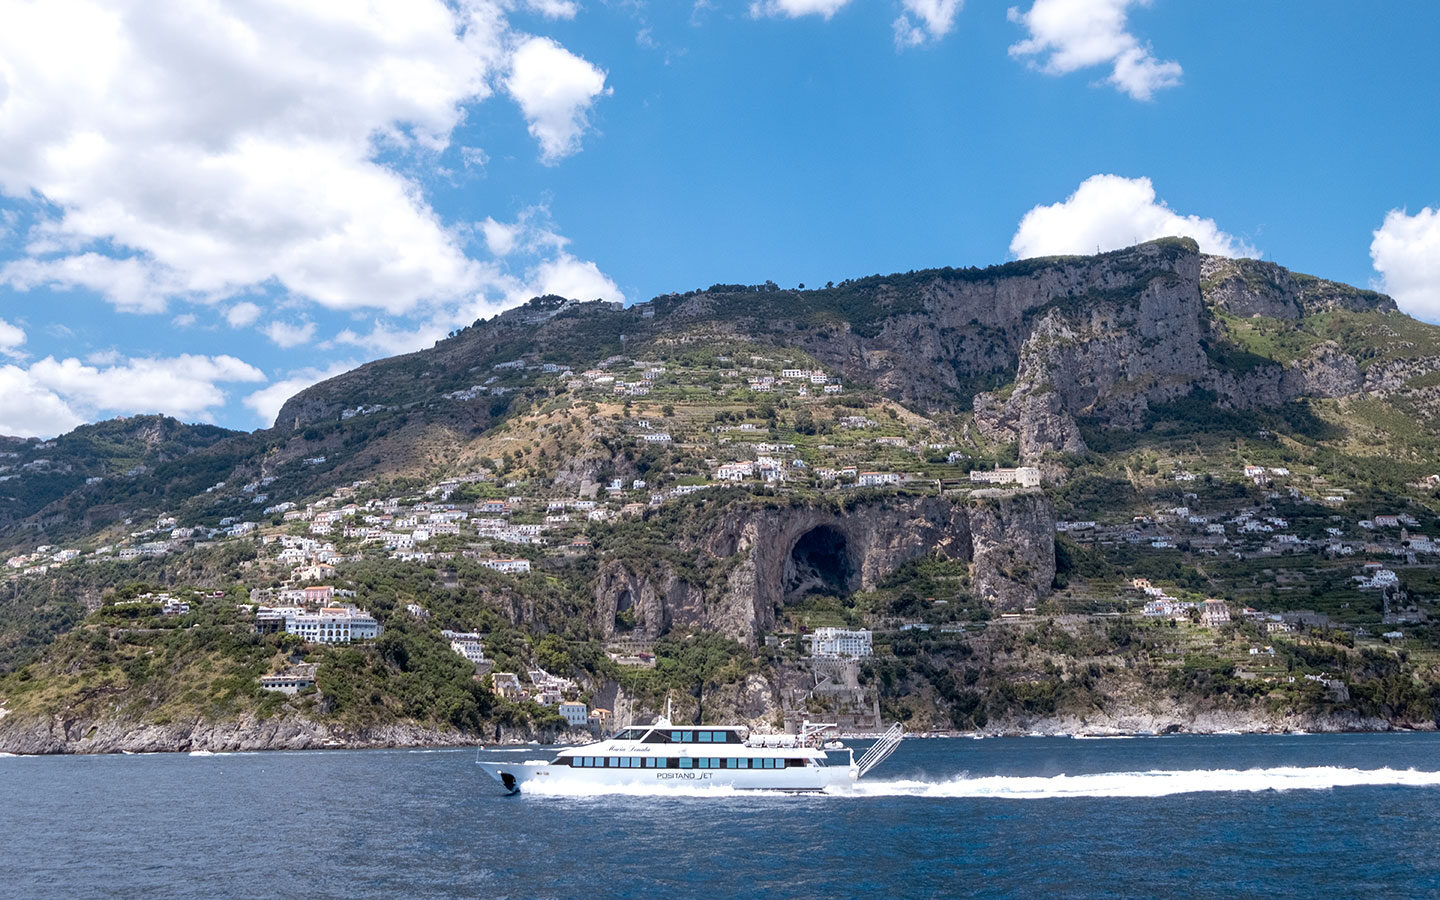 Travelling along the Amalfi Coast by ferry